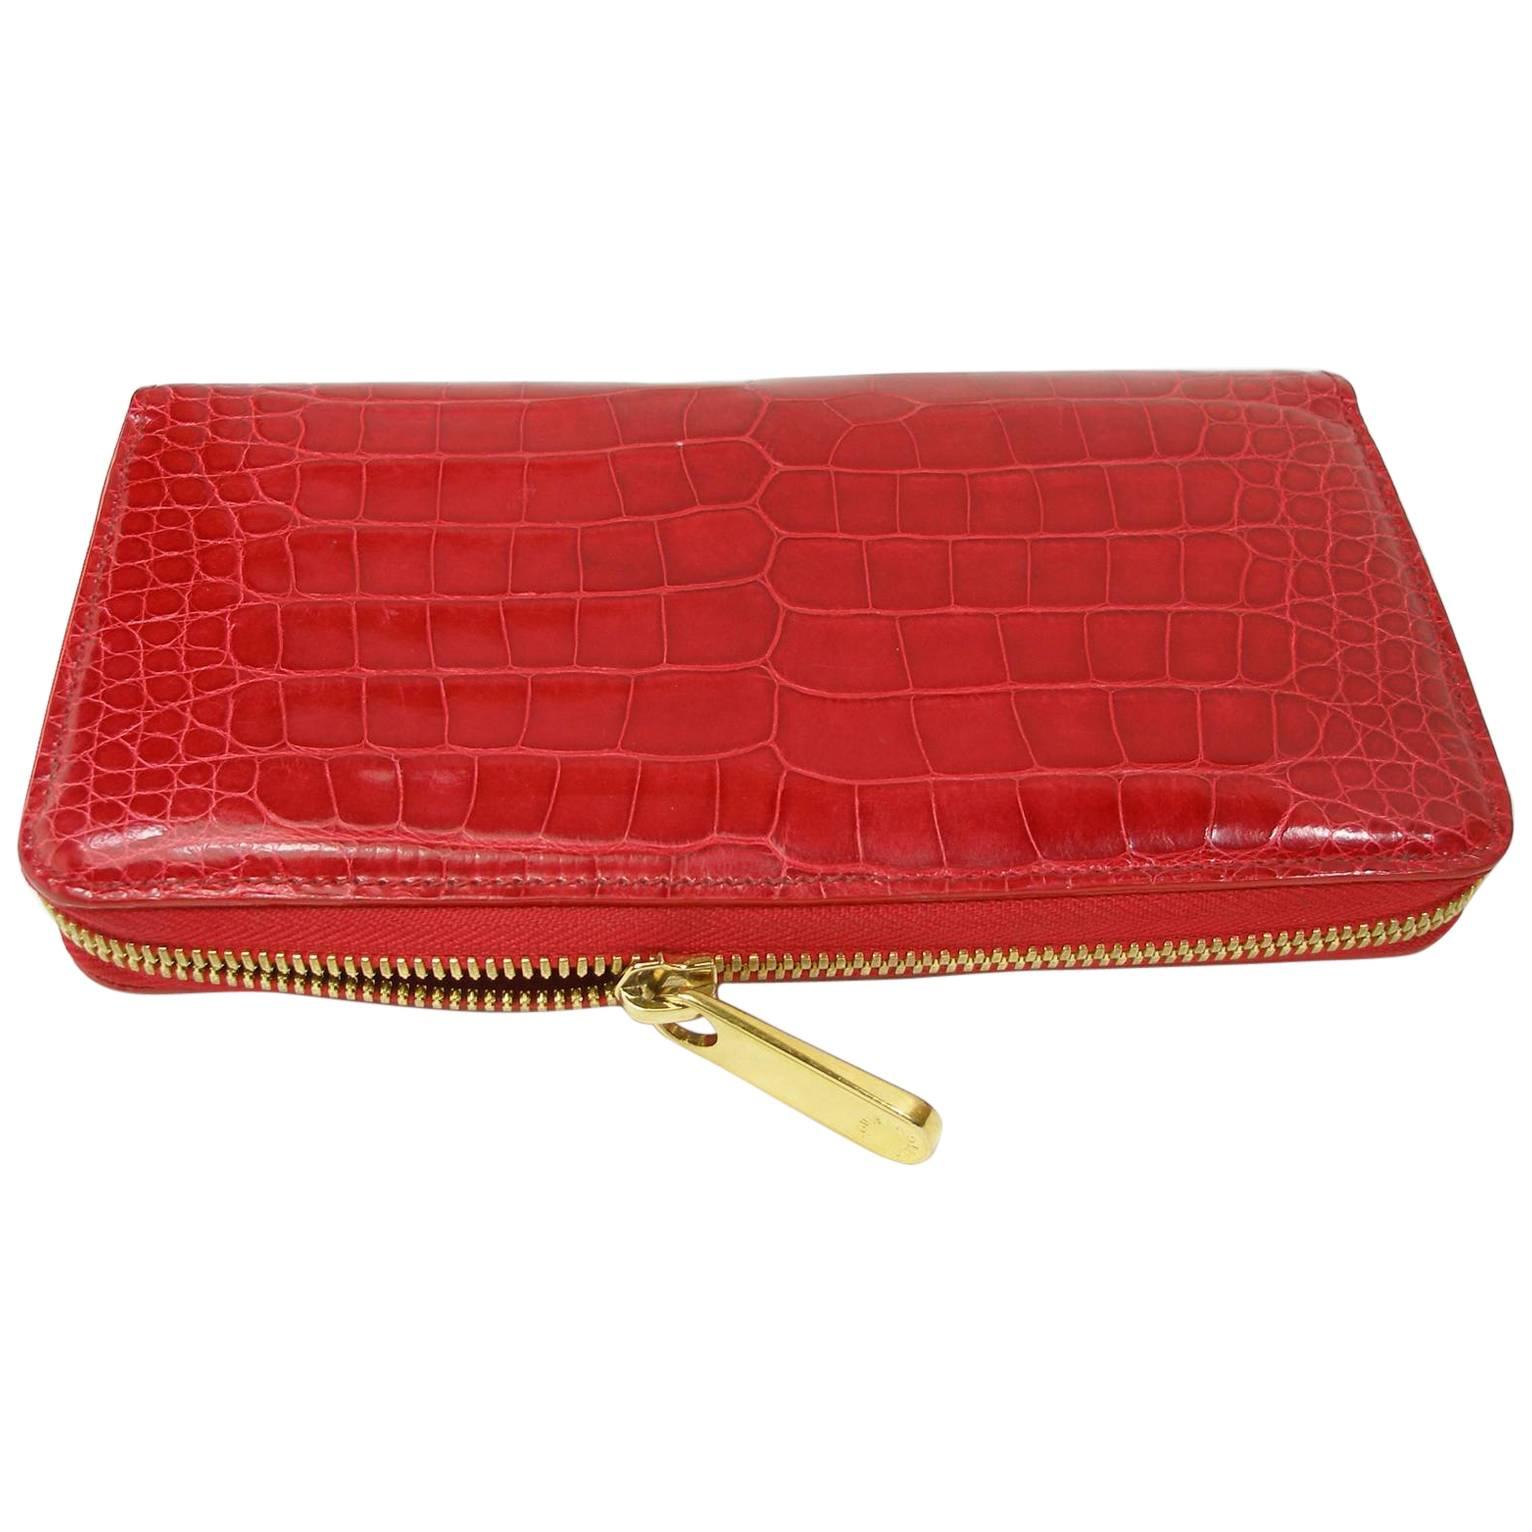 Circa 2010's Rare Louis Vuitton Wallet or Clutch Zippy Red Alligator Wallet For Sale